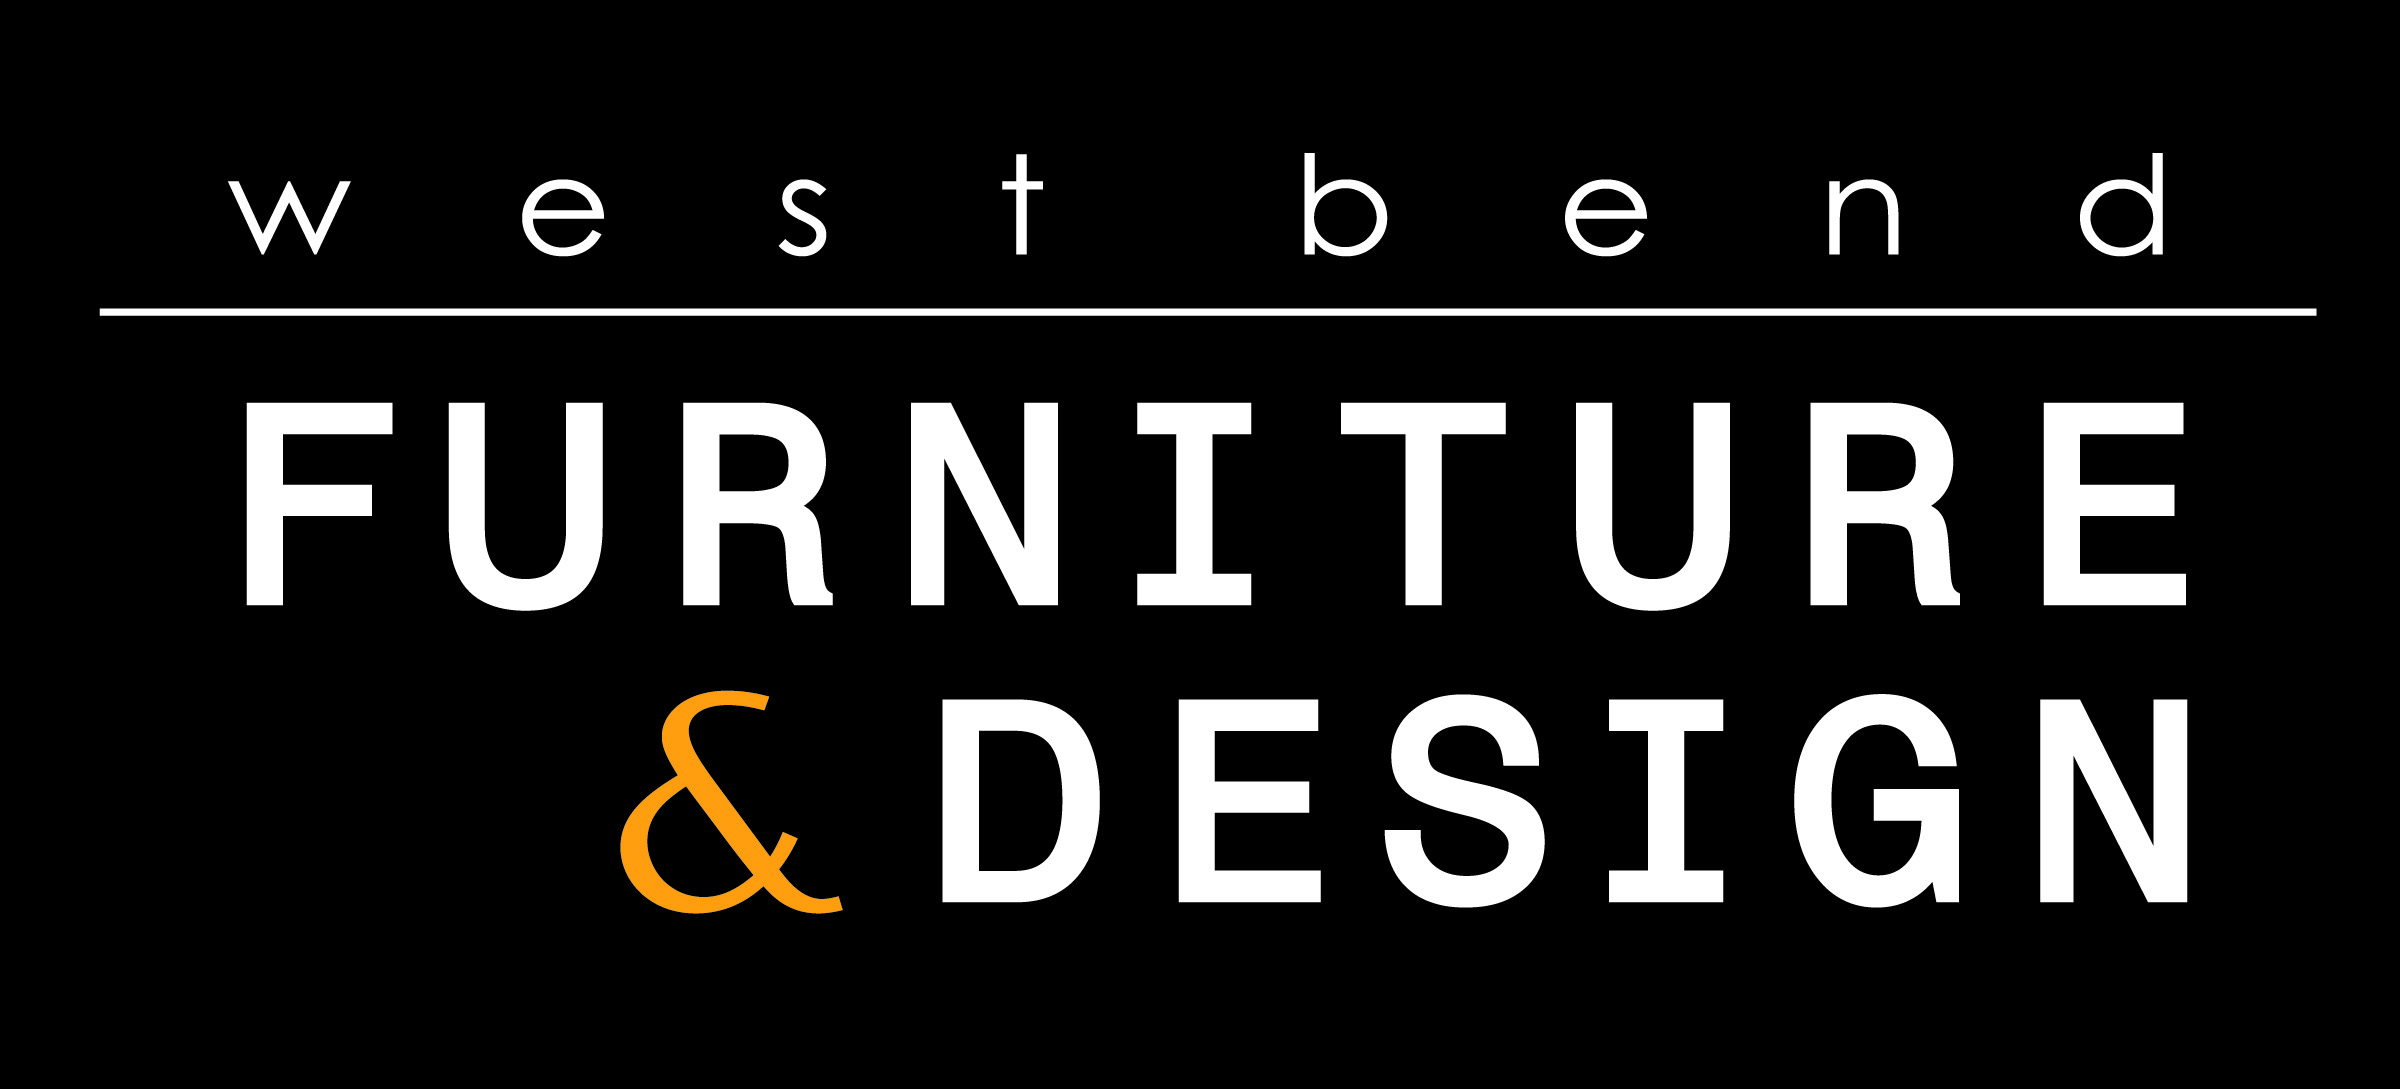 West Bend Furniture Design 1411 W Washington St West Bend Wi